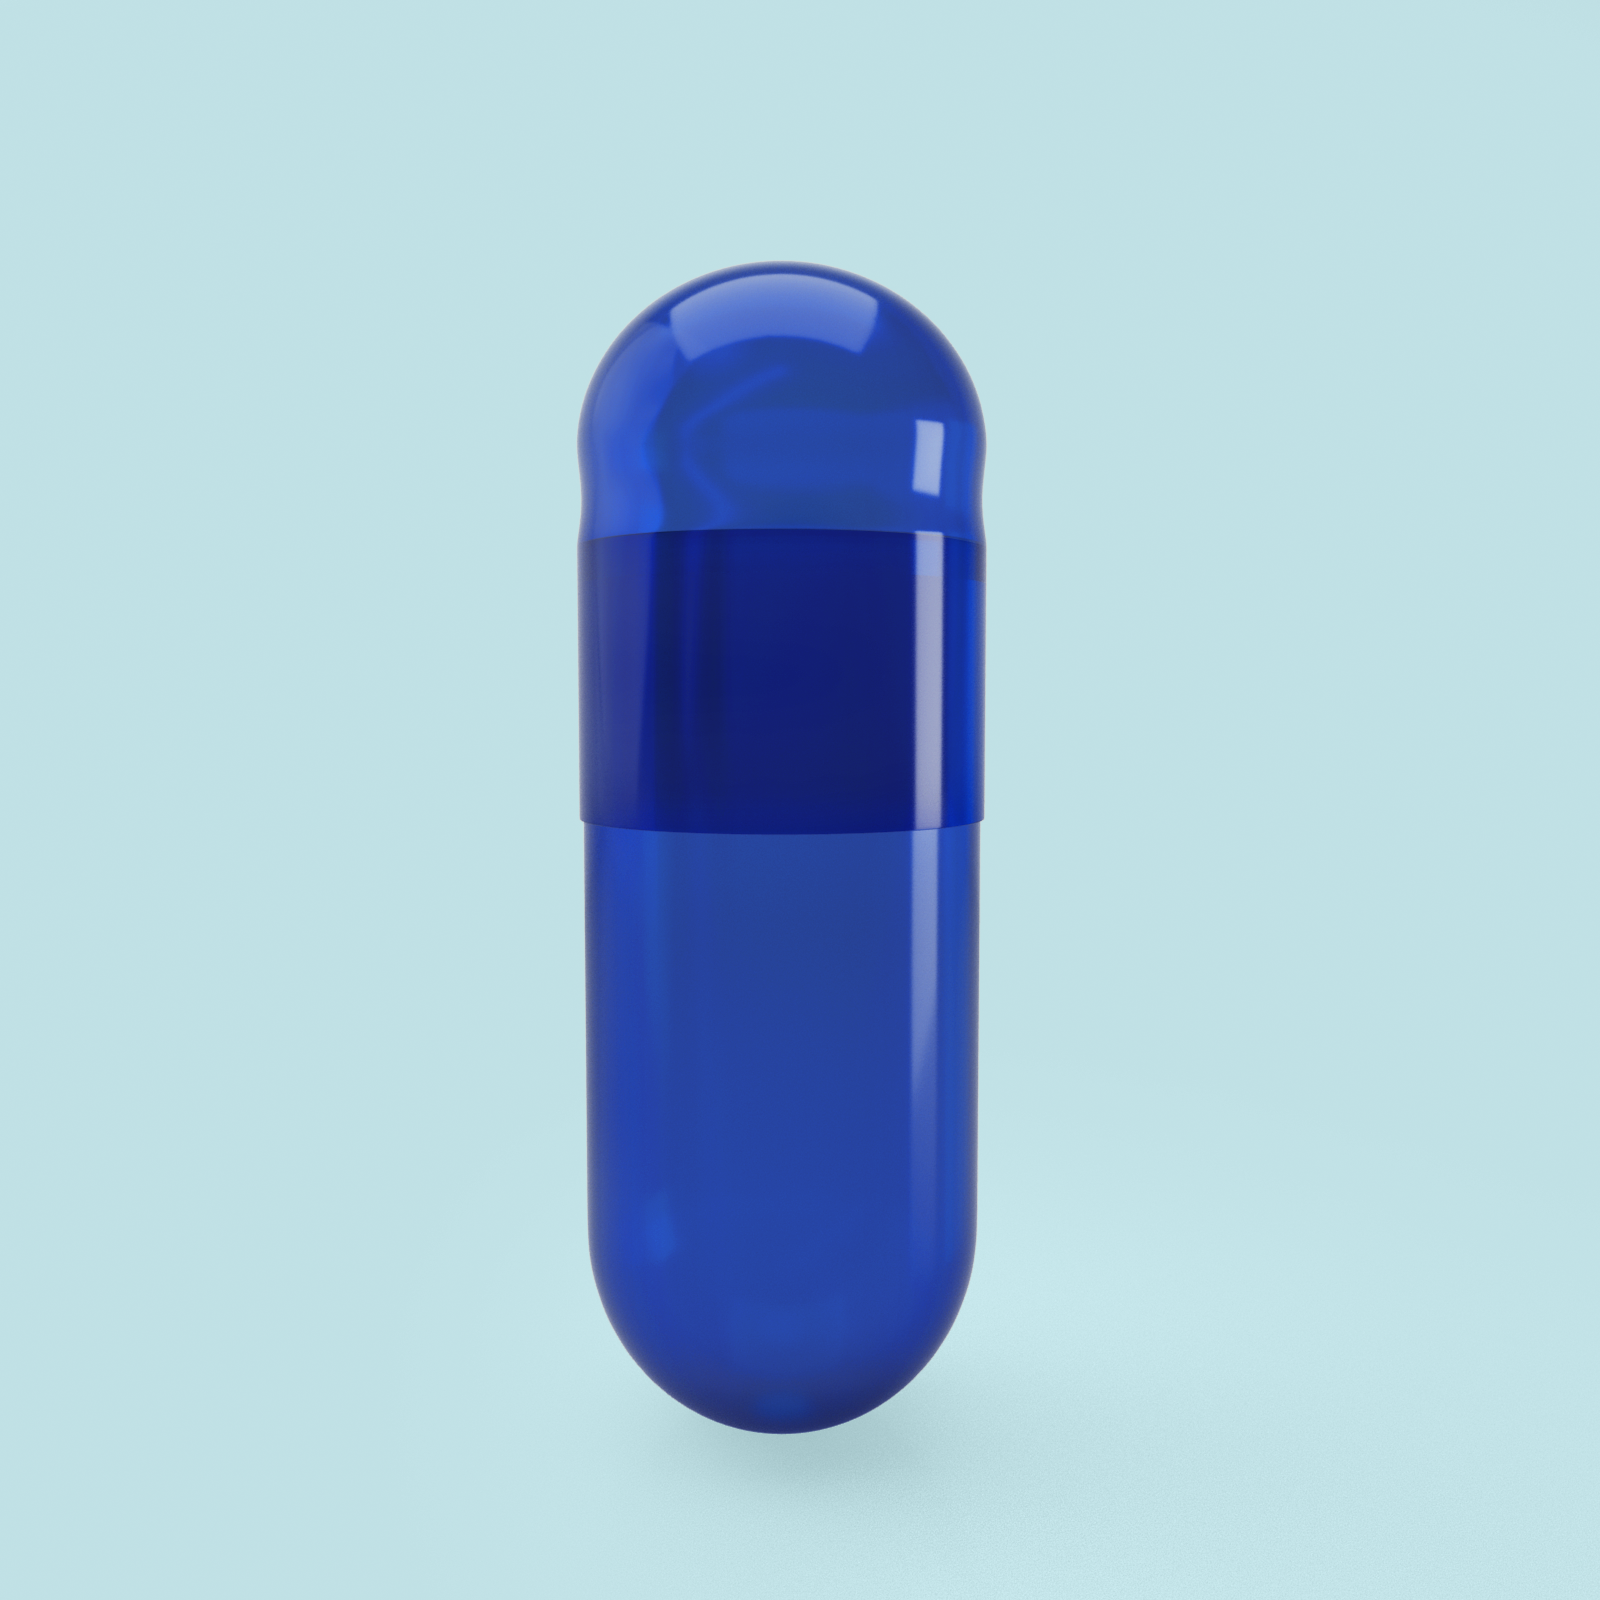 Titanium Dioxide (TiO2) Free - Colored Empty Gelatin Capsules Size 00 (Box of 75,000) - Blue